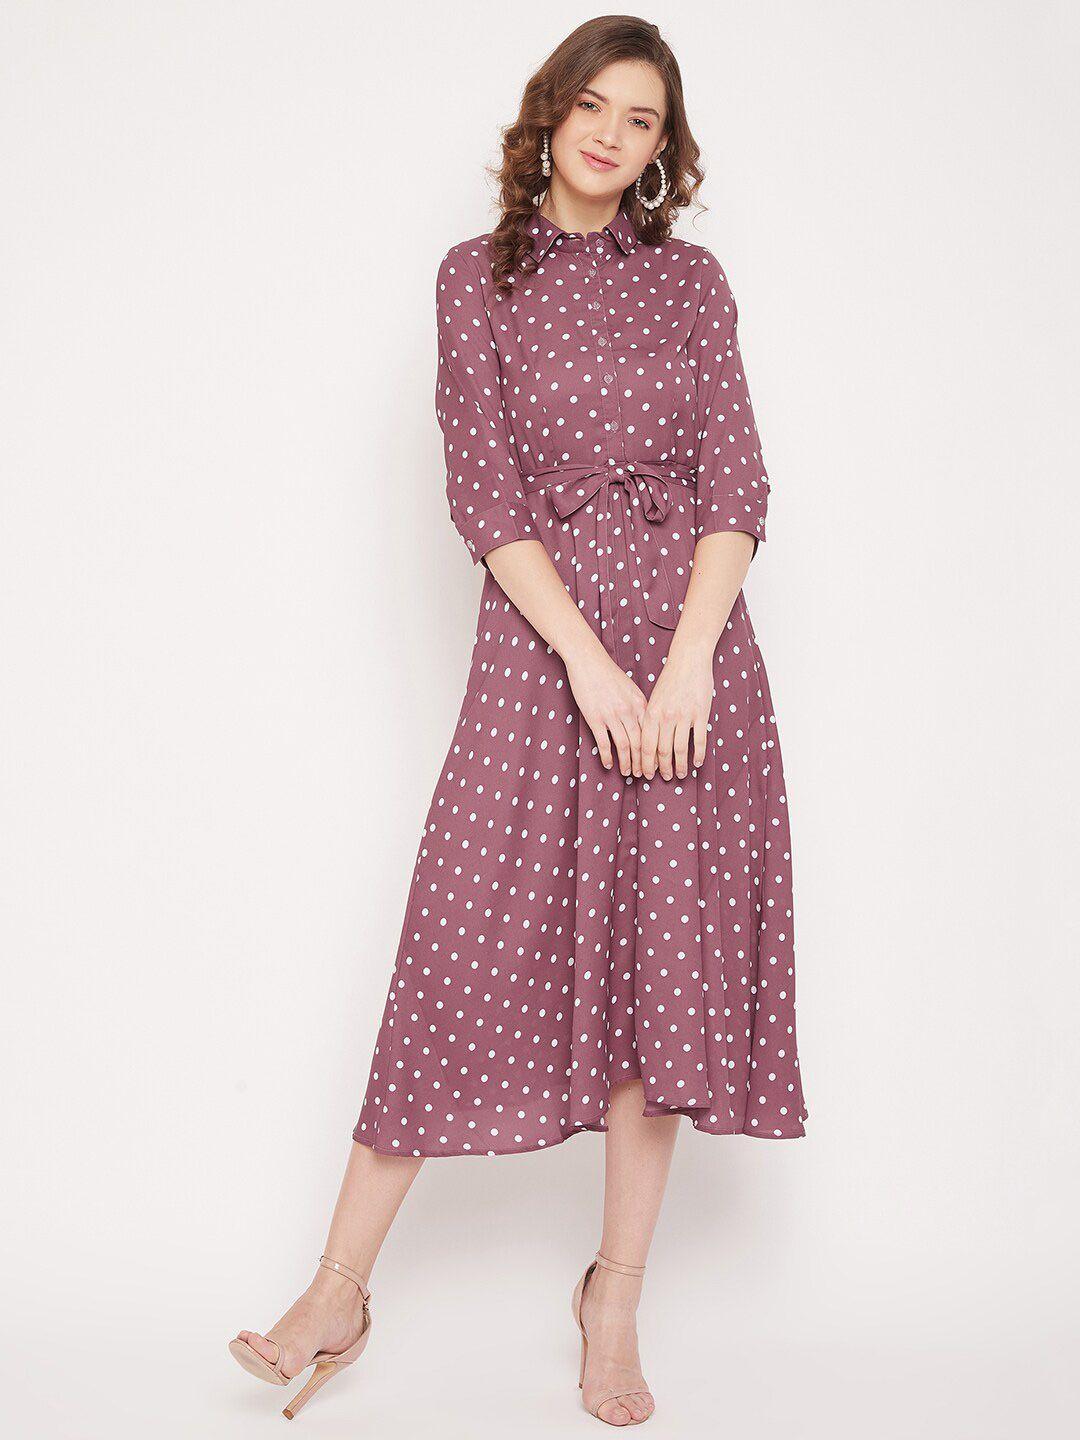 panit women mauve polka dots printed crepe shirt midi dress